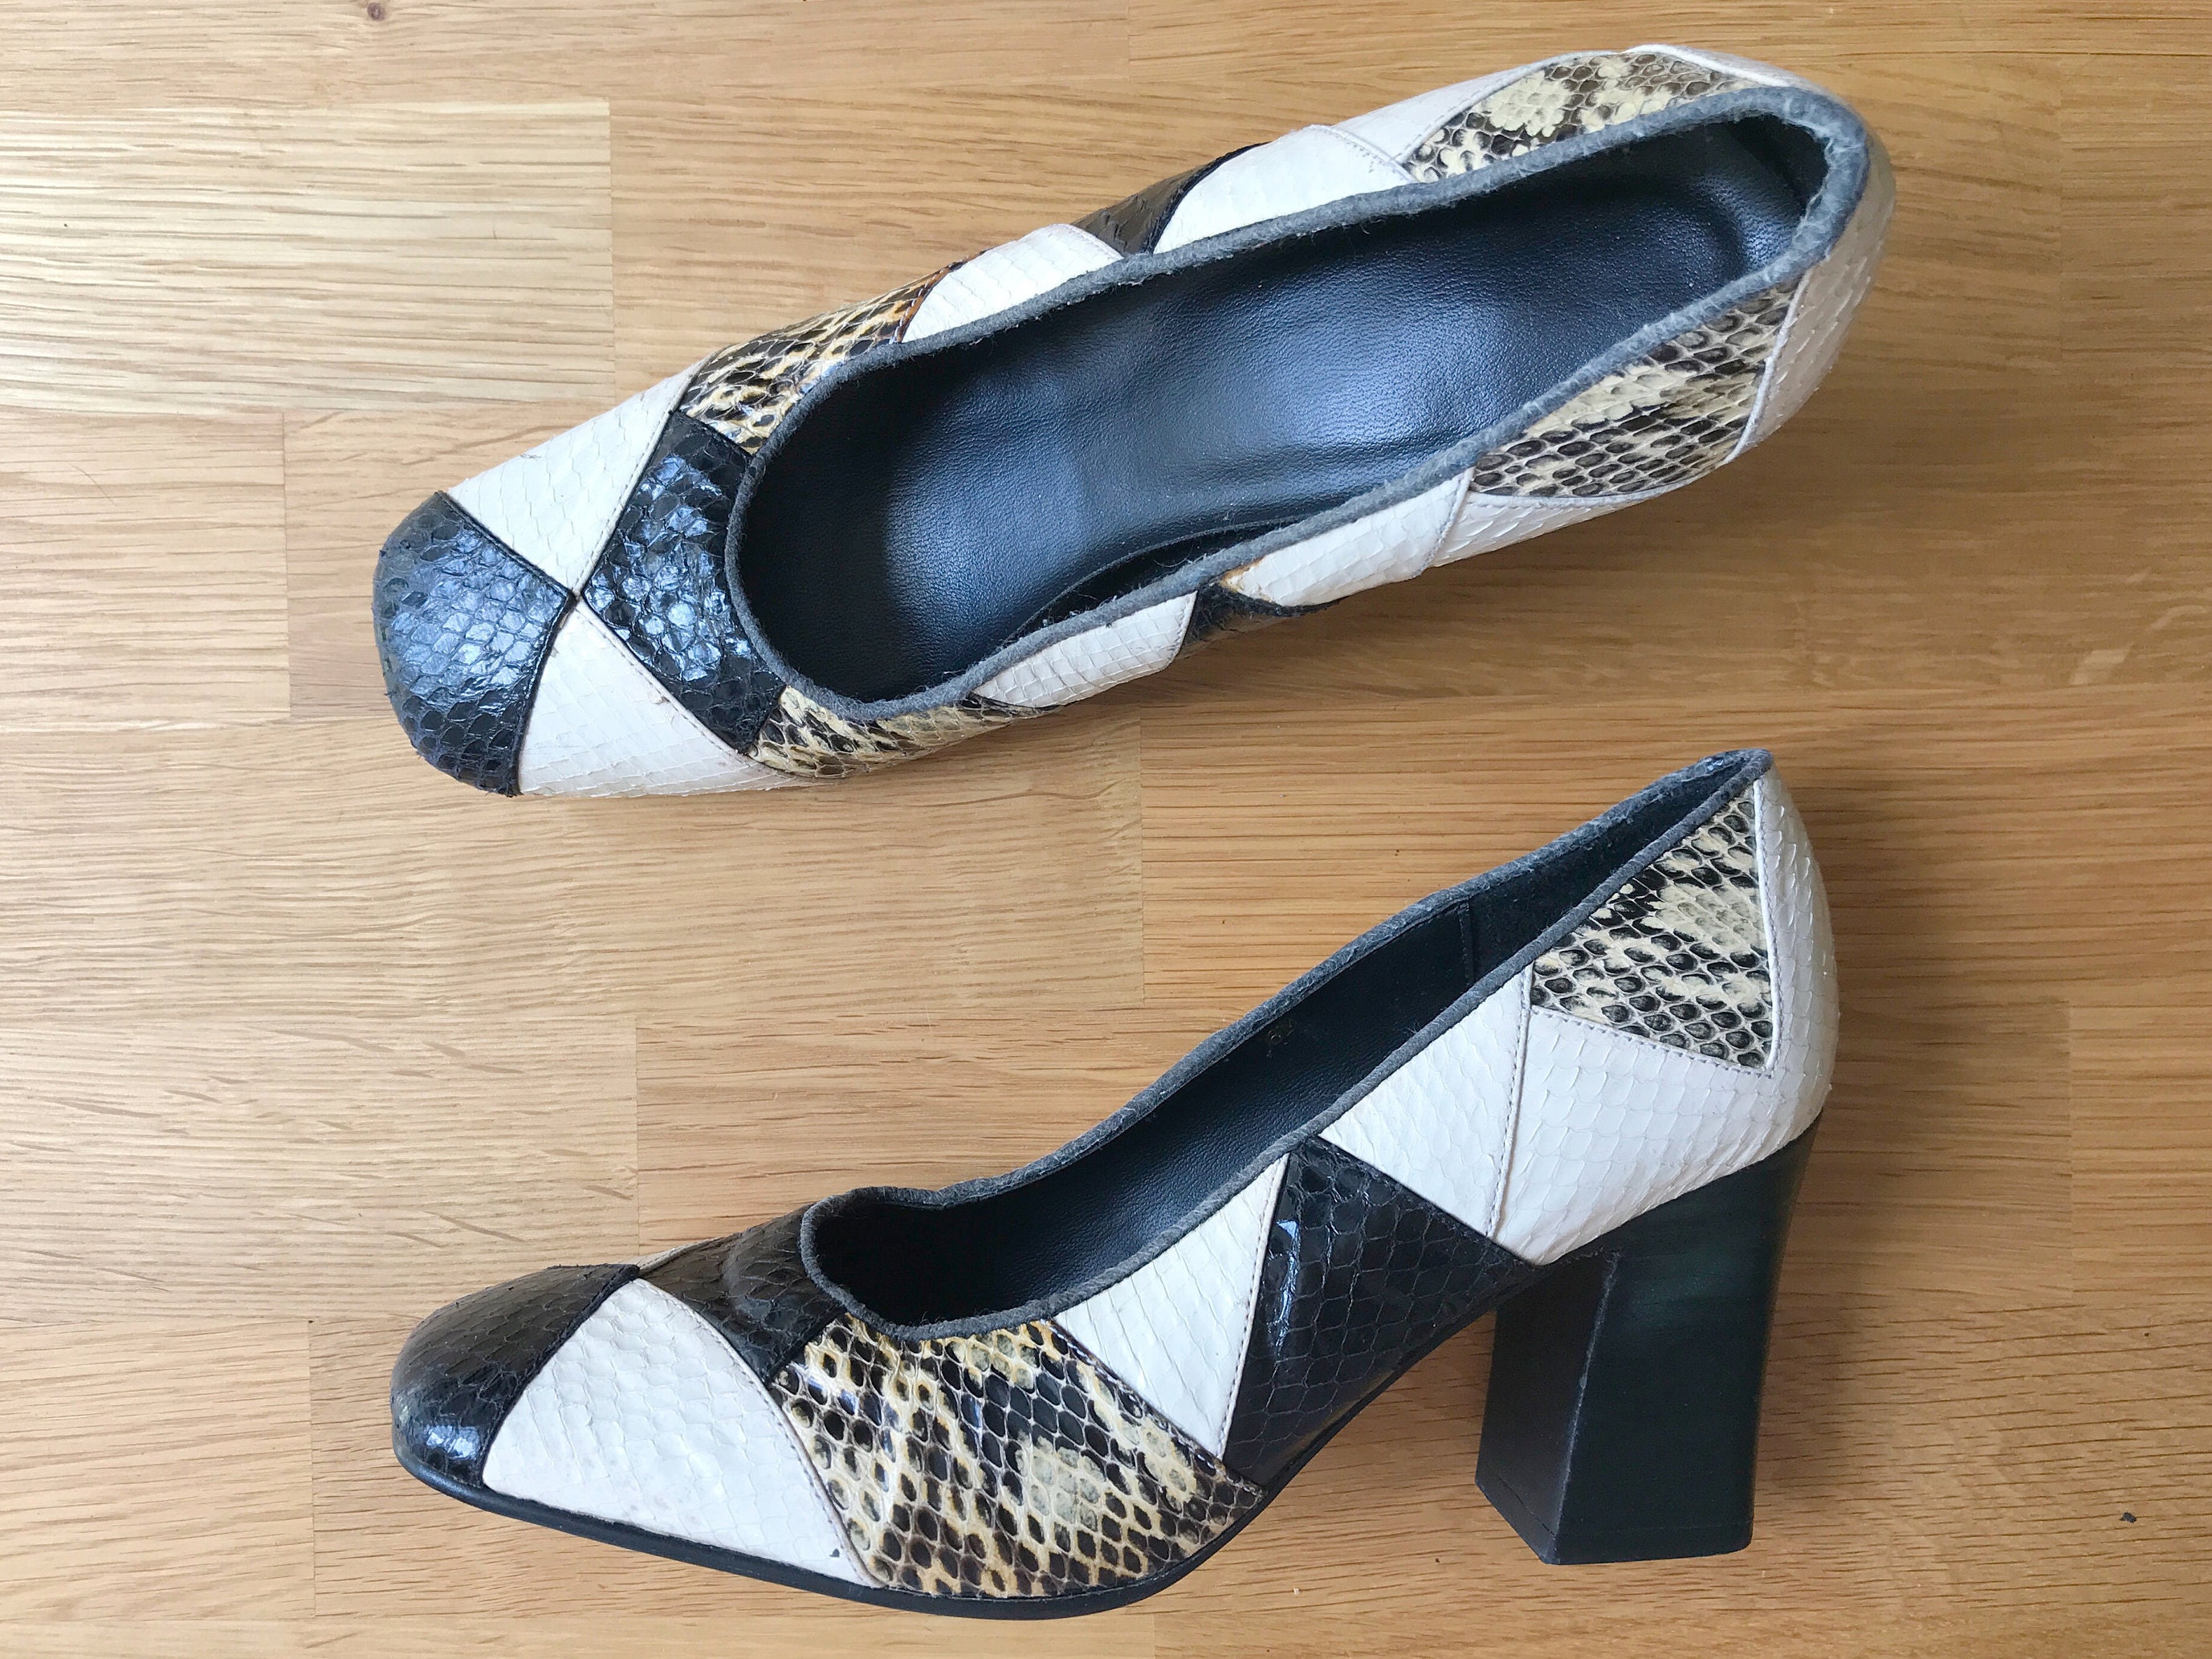 Bjux – White Fashion Pointed Snake Print High Heel Sandals | Heels, Sandals  heels, White sandals heels